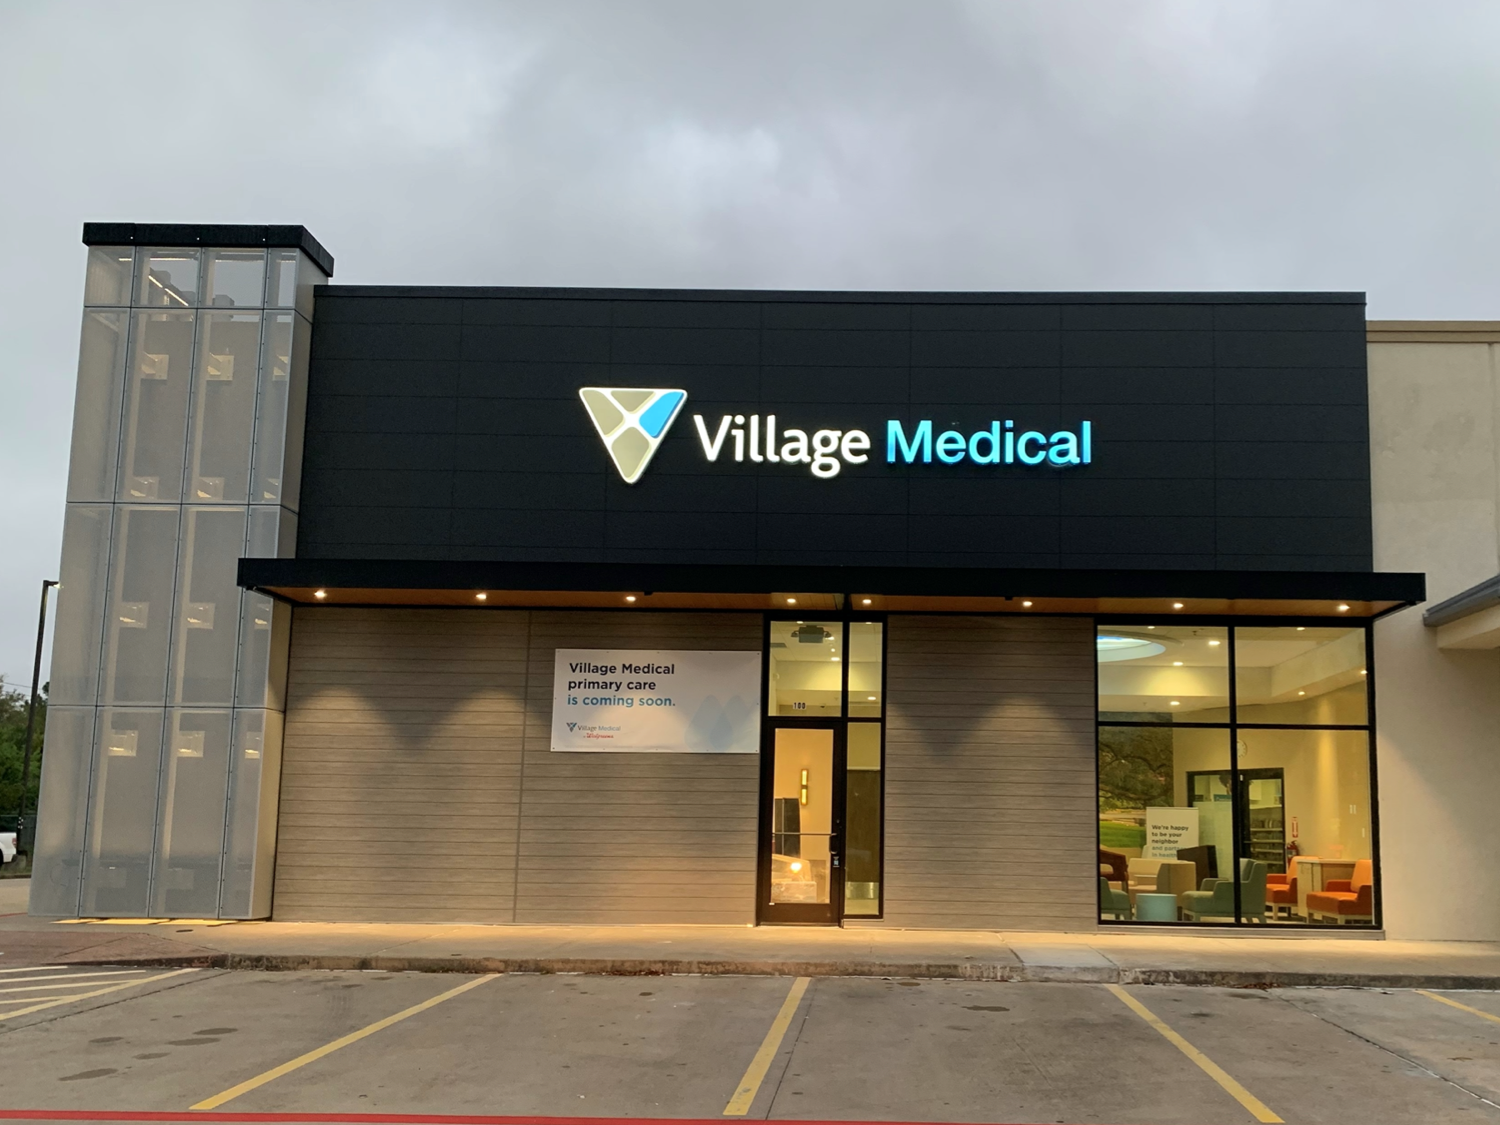 Who owns Village Medical Houston?